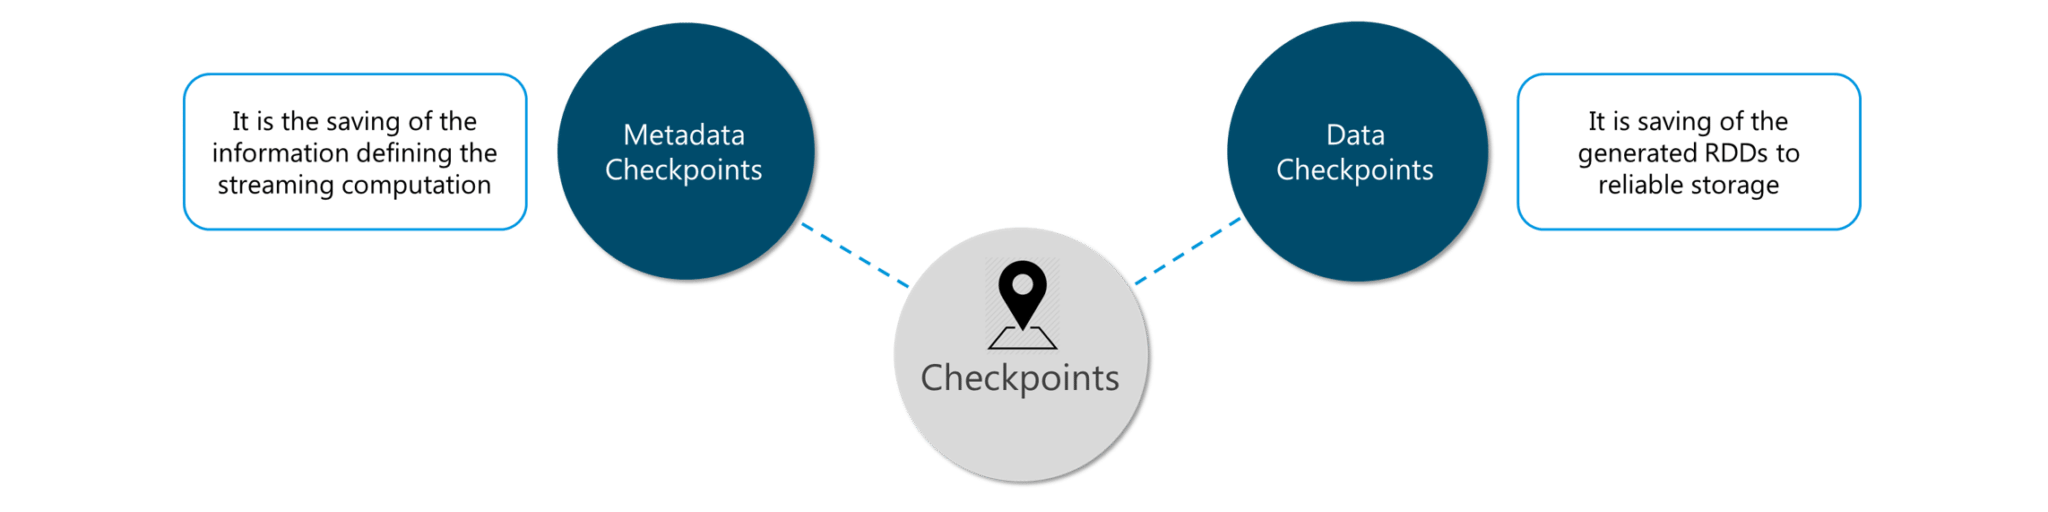 Checkpoints-Spark-Interview-Questions-Edureka.png